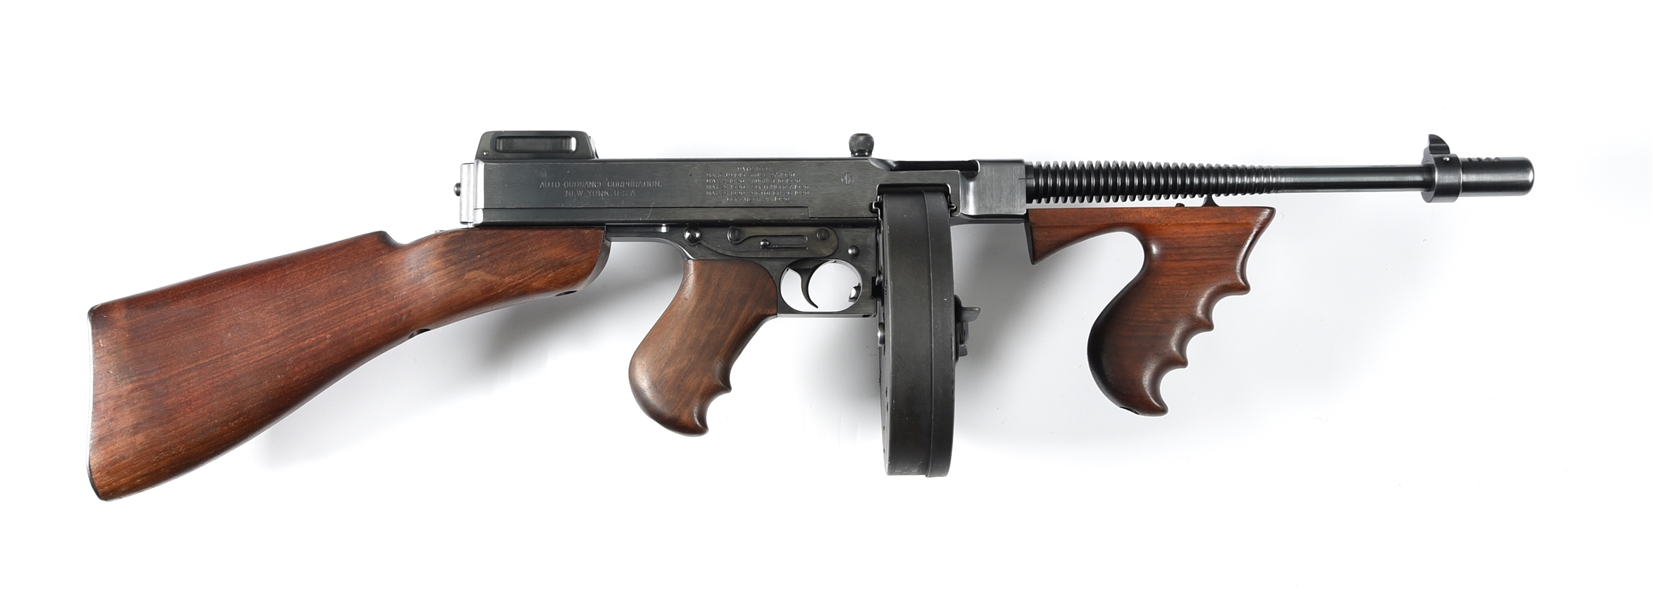 (N) TRULY EXCEPTIONAL ORIGINAL CONDITION COLT 1921AC THOMPSON MACHINE GUN (CURIO AND RELIC).